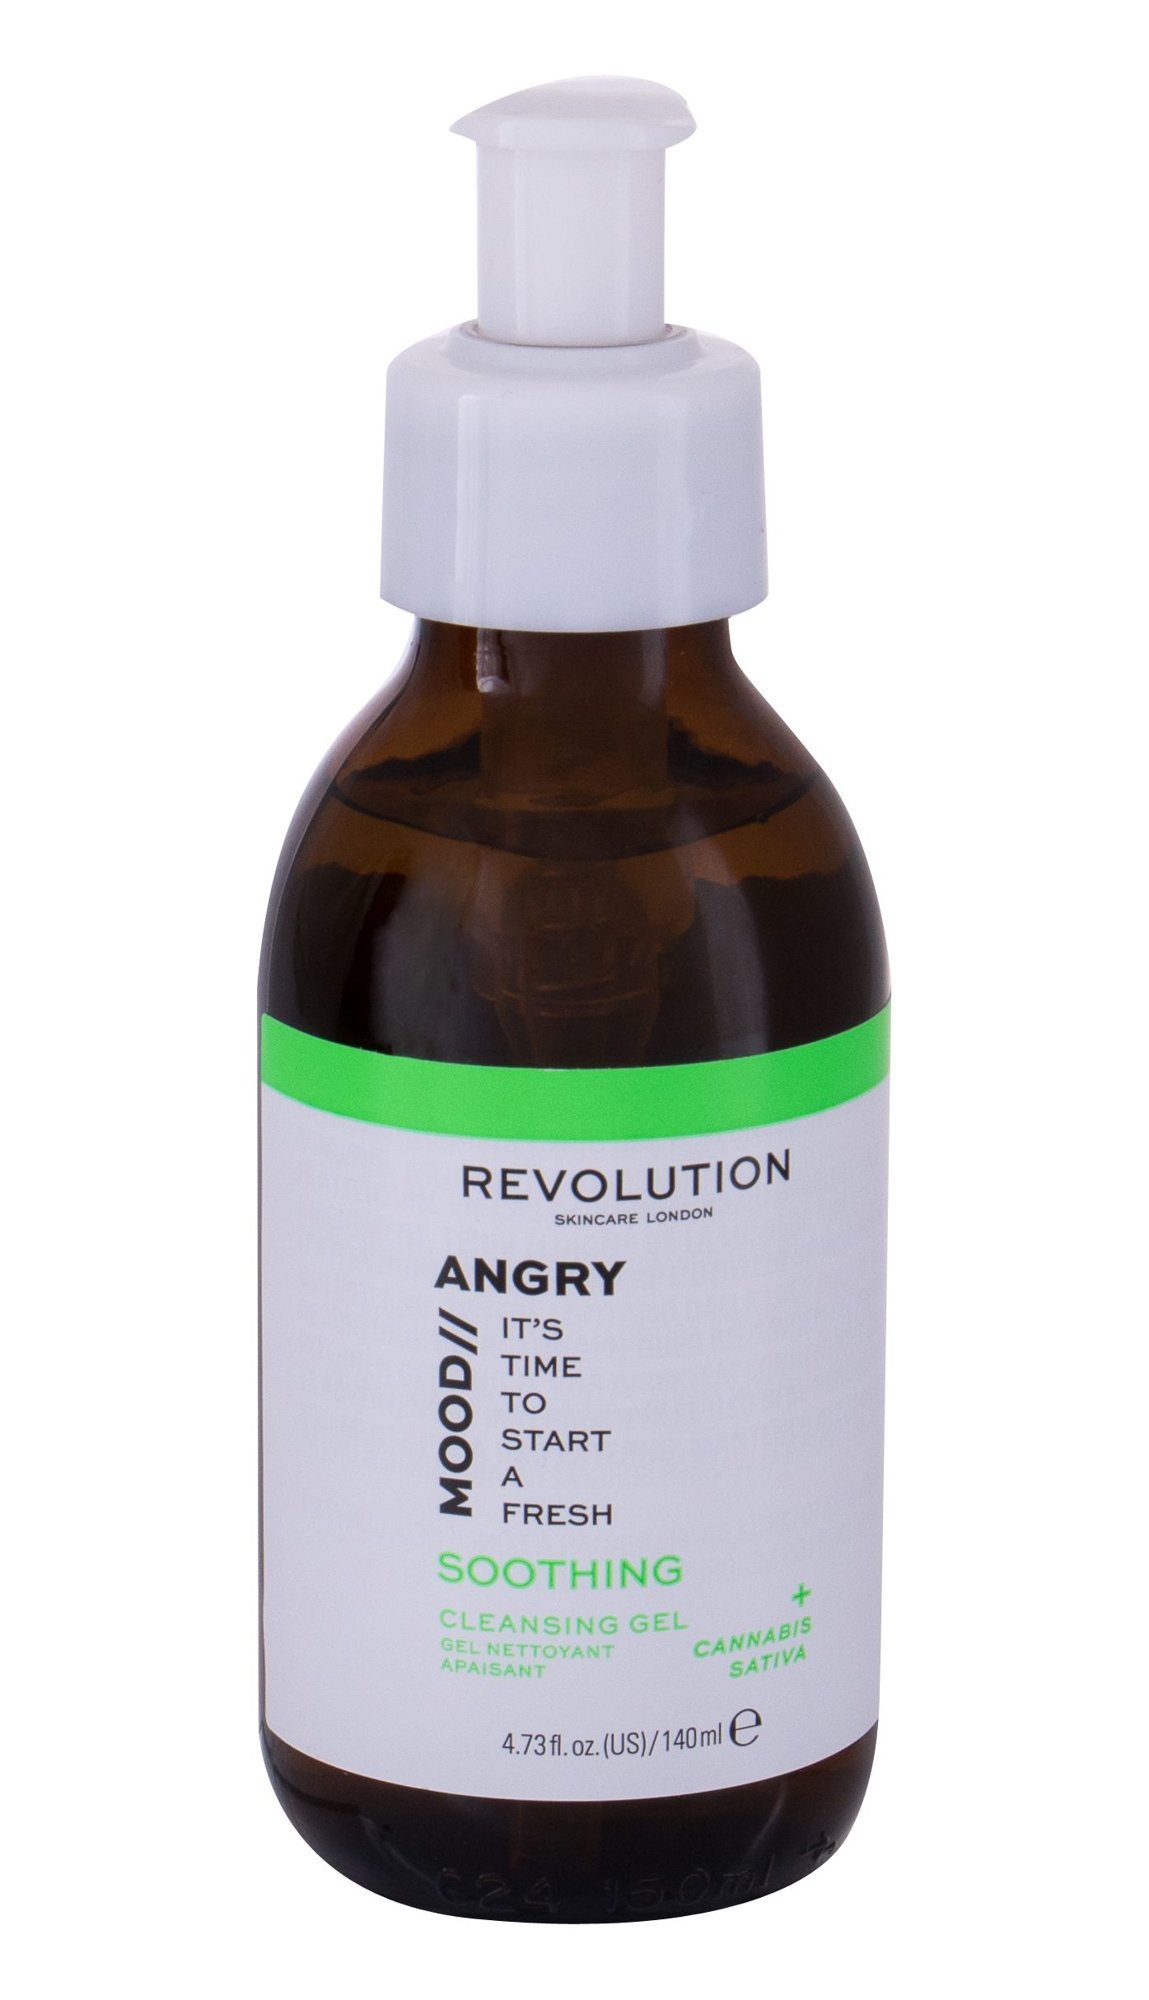 Revolution Skincare Angry Mood Soothing veido gelis